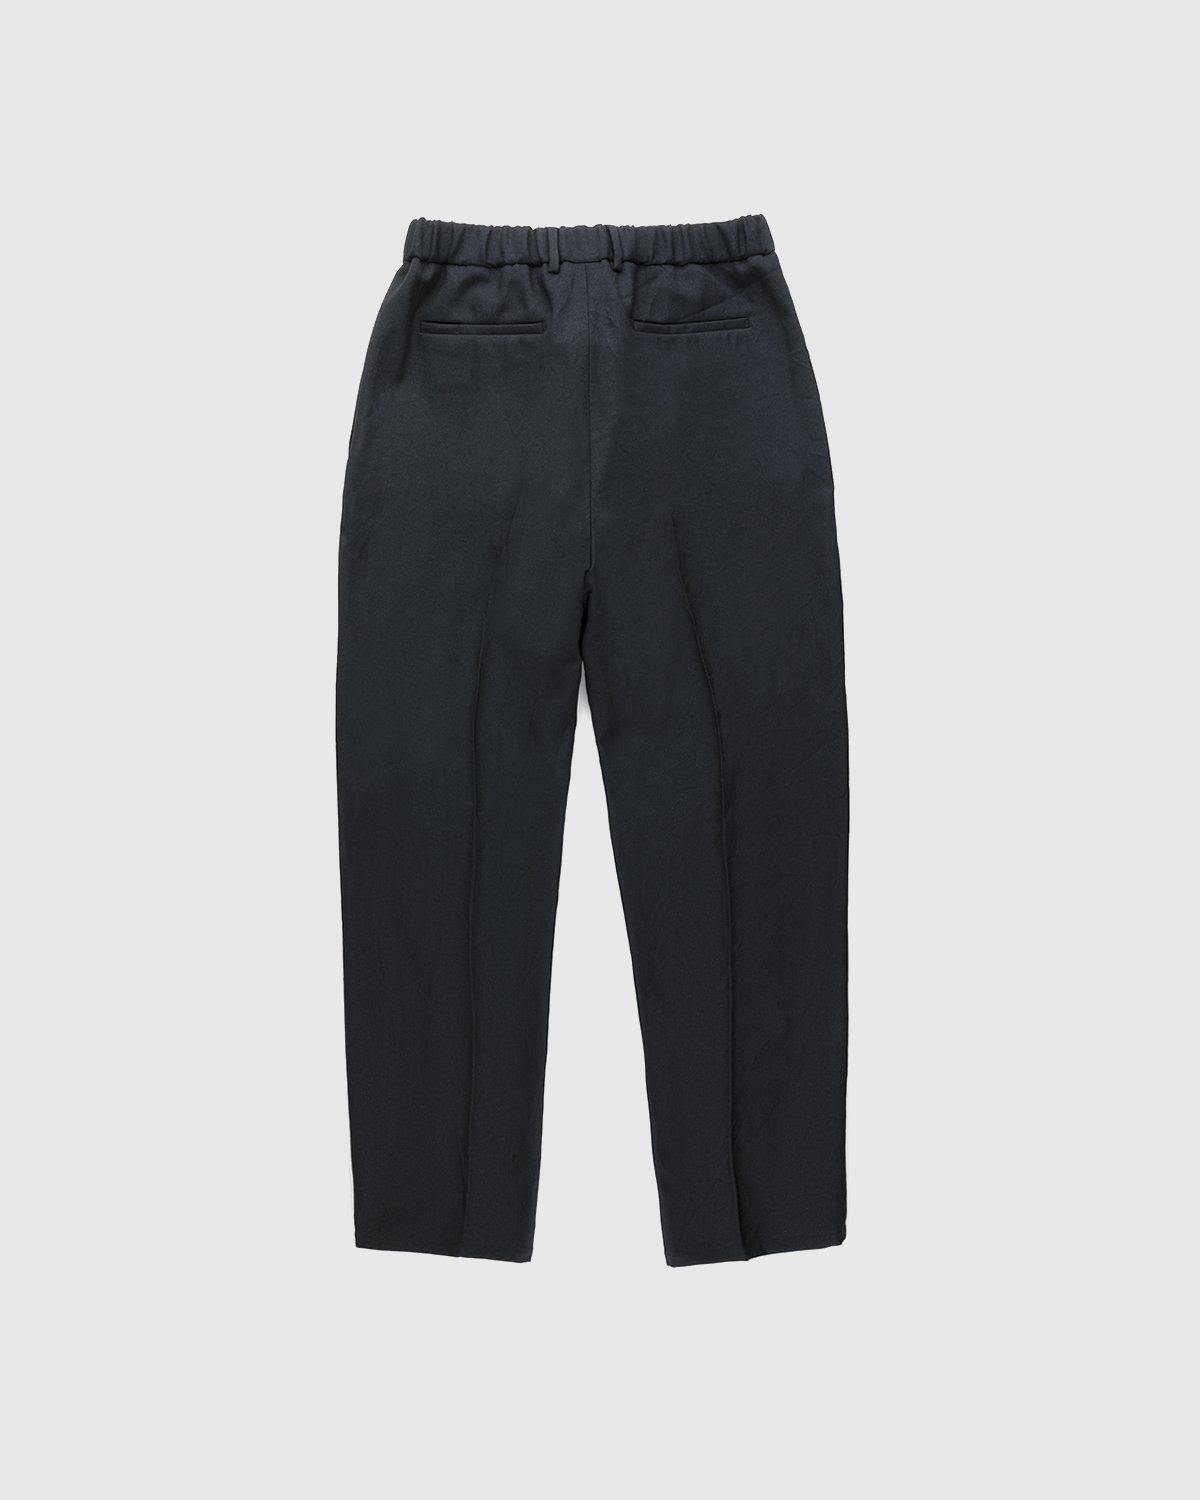 Jil Sander – Trousers Black - Trousers - Black - Image 2